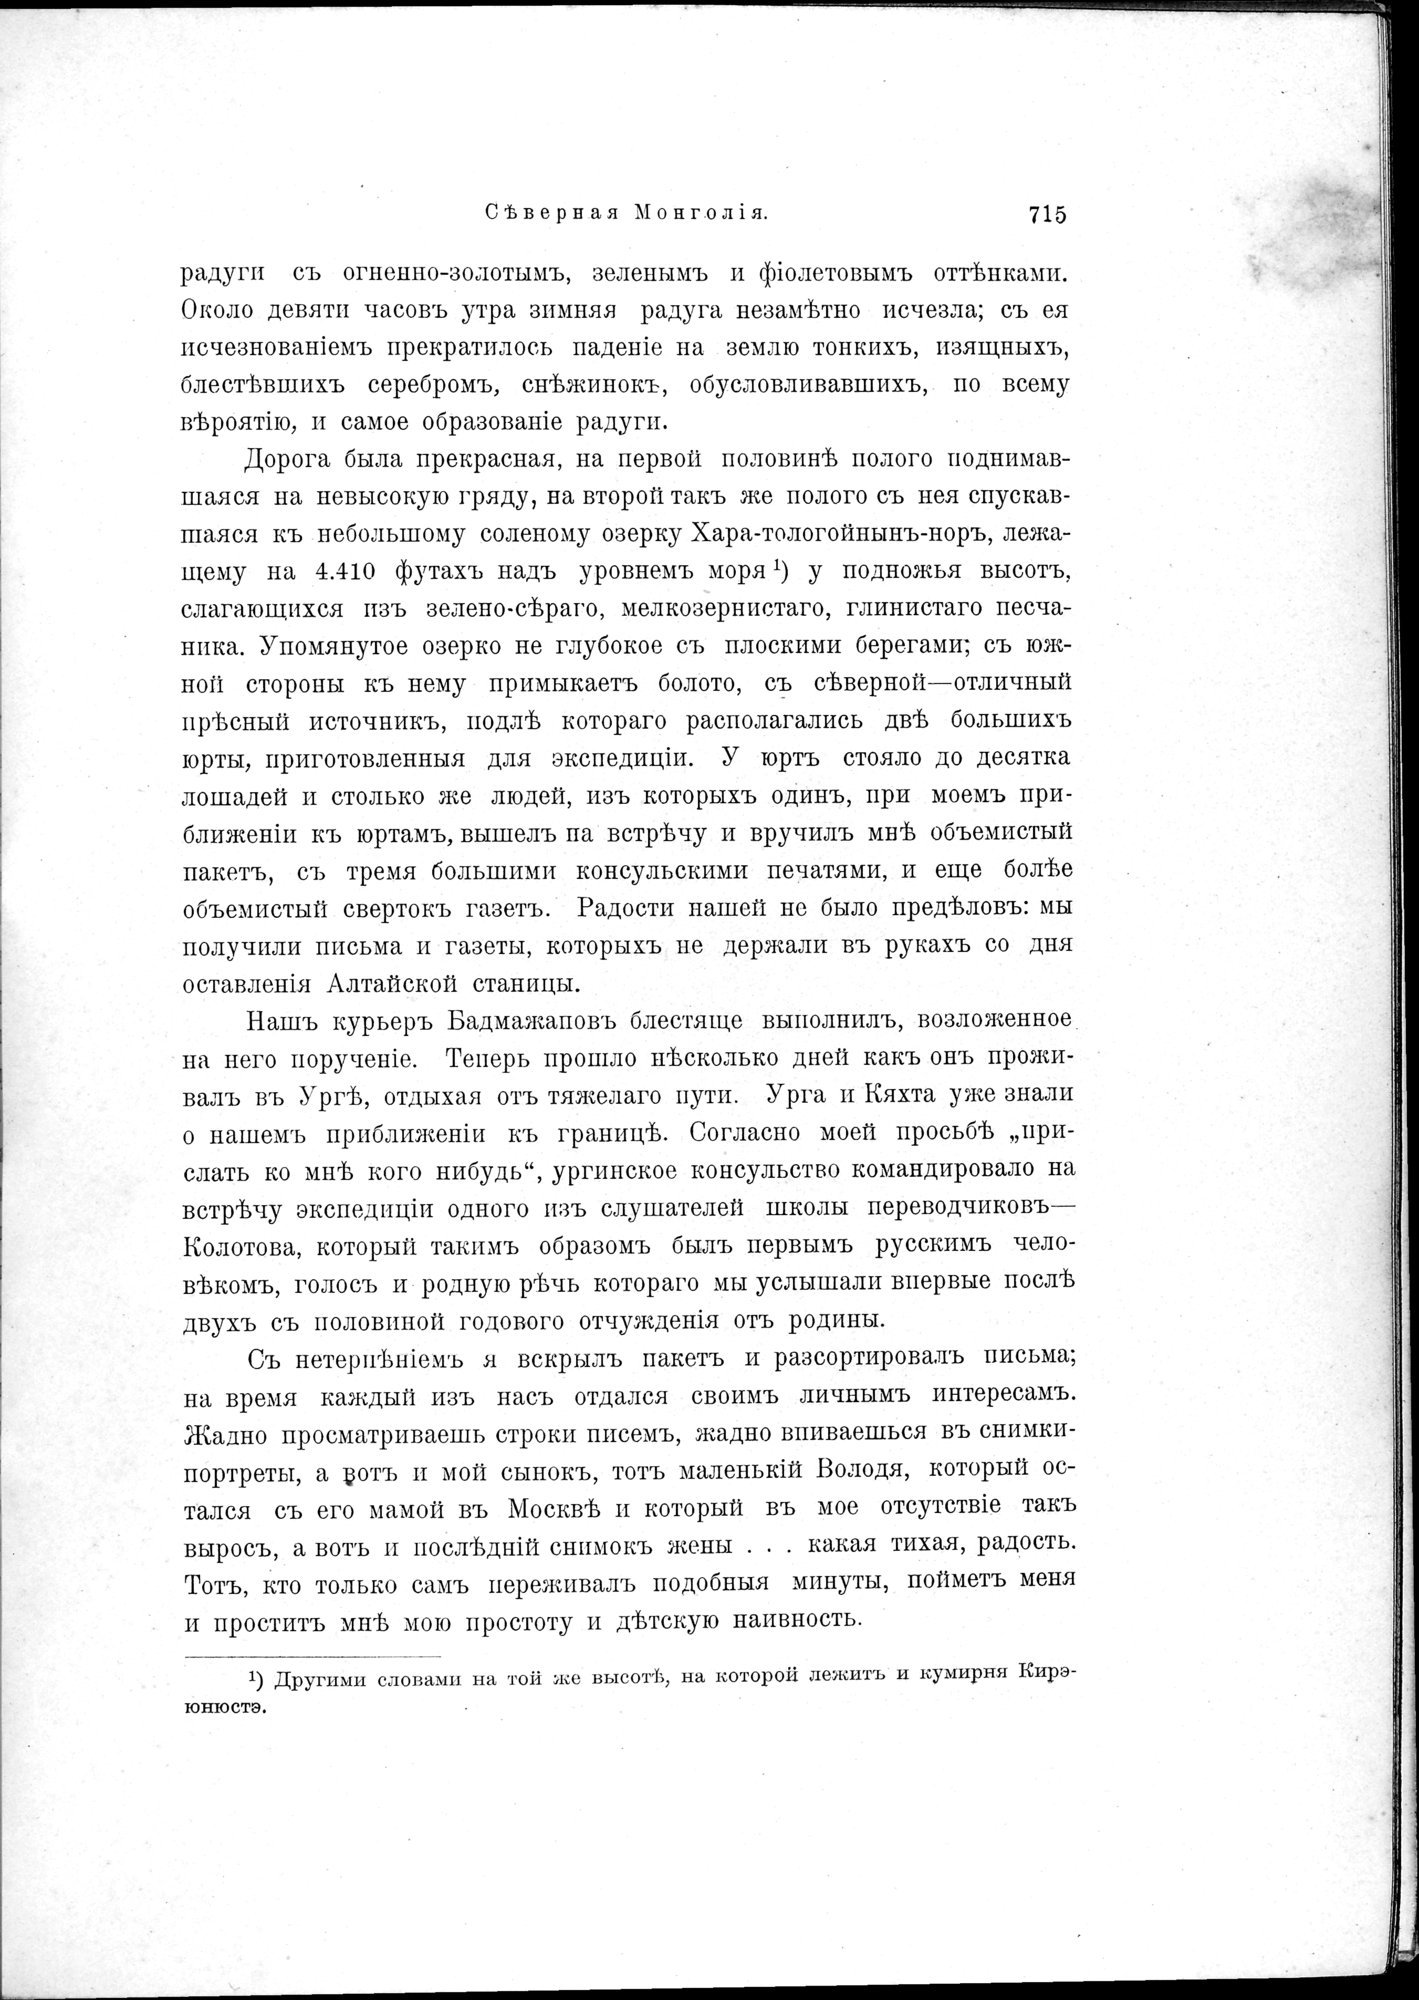 Mongoliia i Kam : vol.2 / Page 553 (Grayscale High Resolution Image)